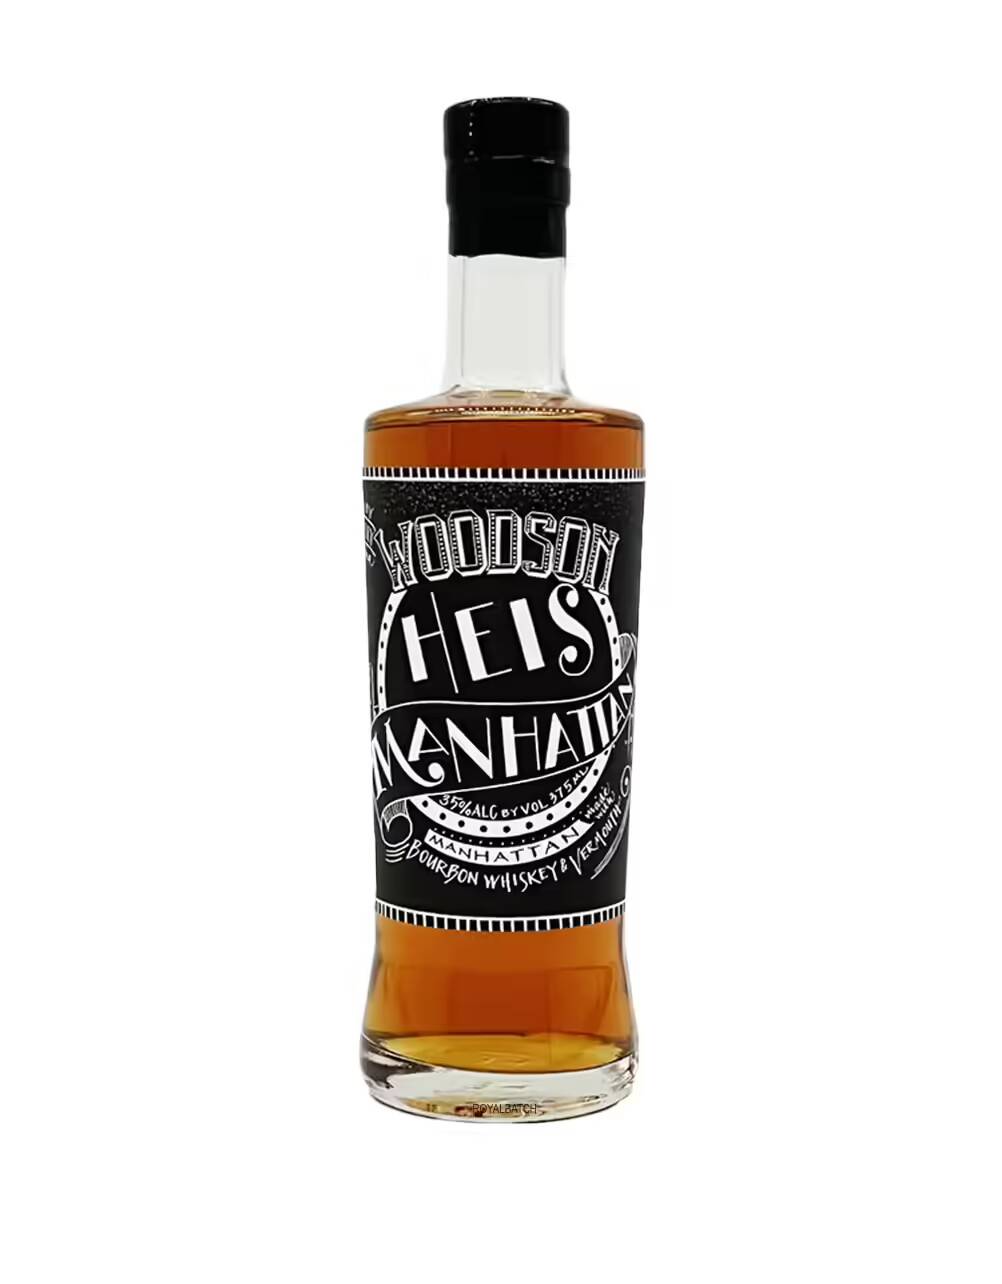 Woodson Heis Manhattan 375ml Whiskey